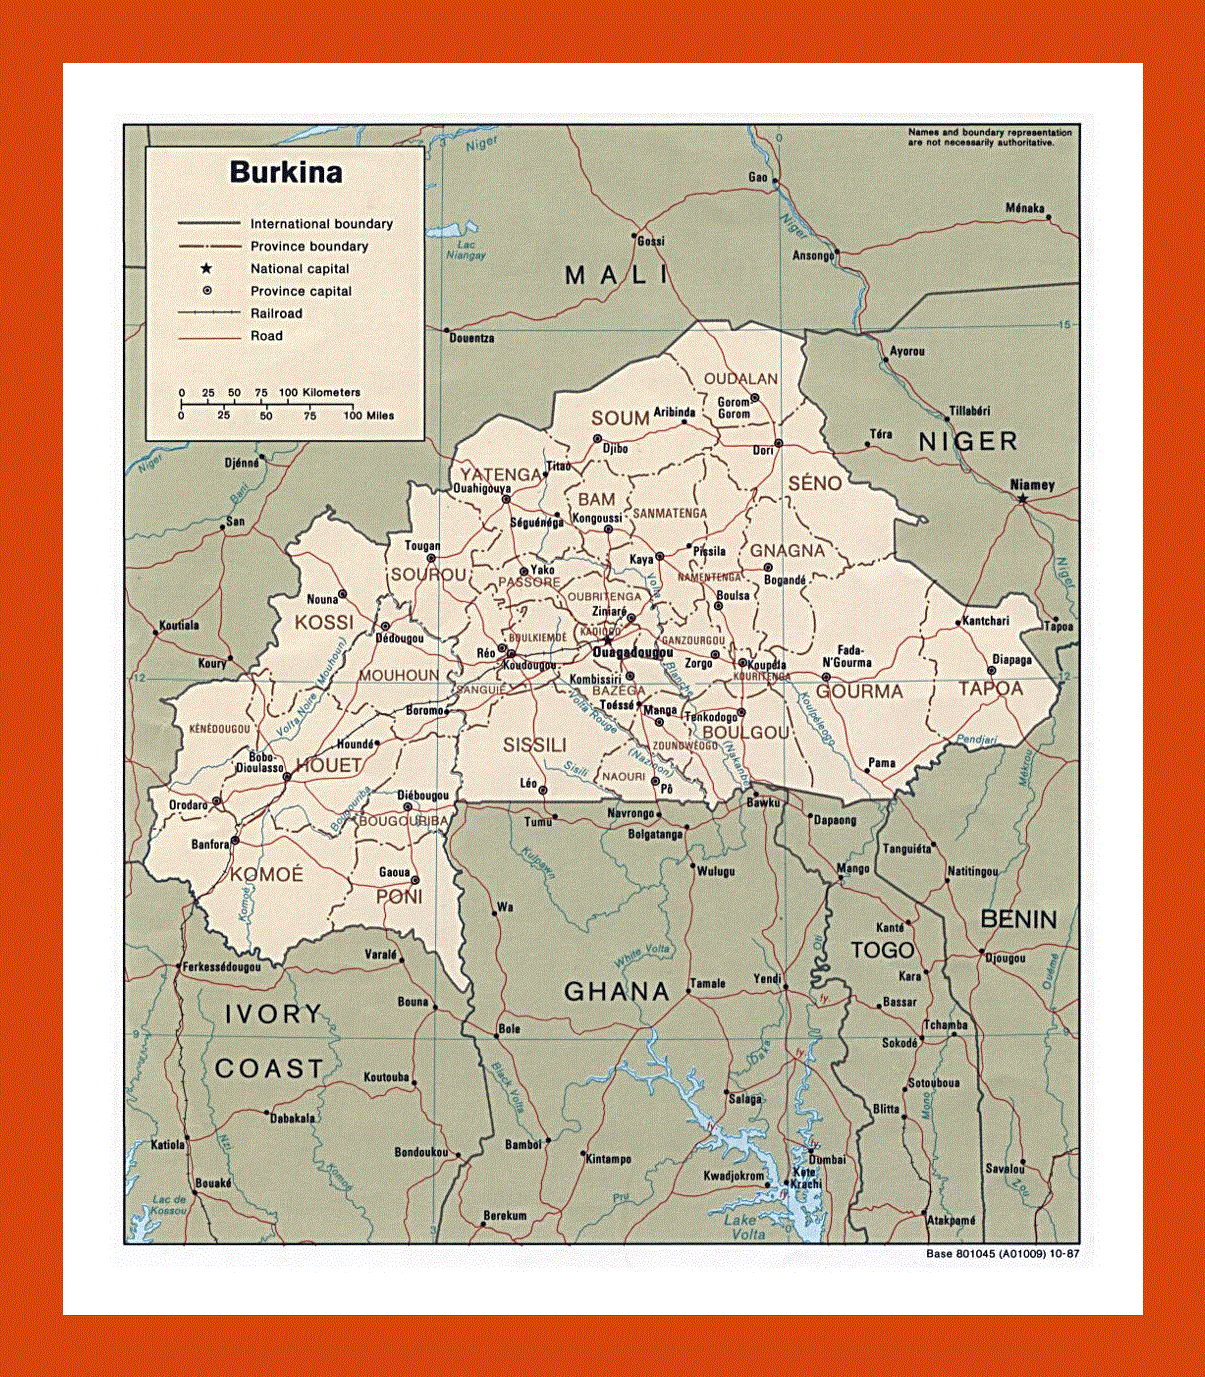 Political and administrative map of Burkina Faso - 1987